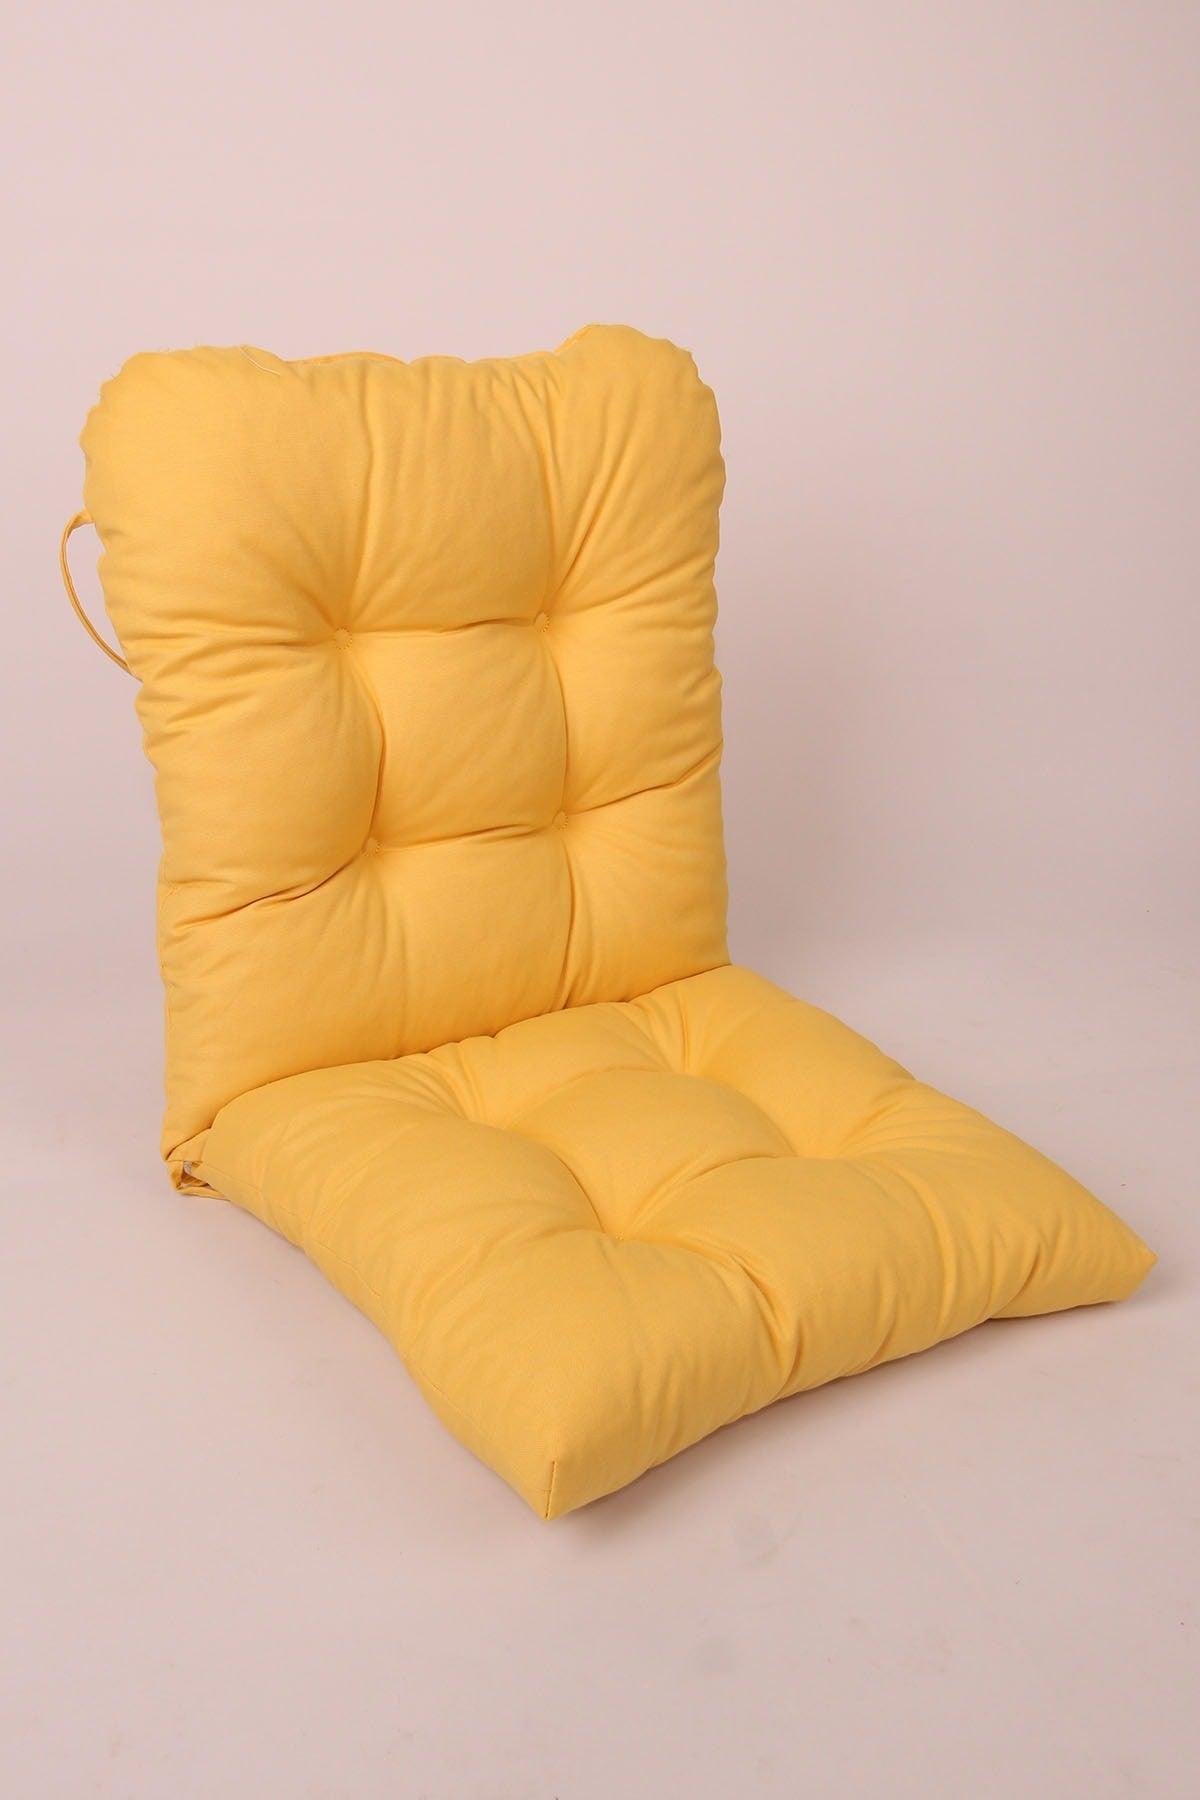 Neva Pofidik Yellow Backed Chair Cushion Specially Stitched Laced 44x94 Cm - Swordslife